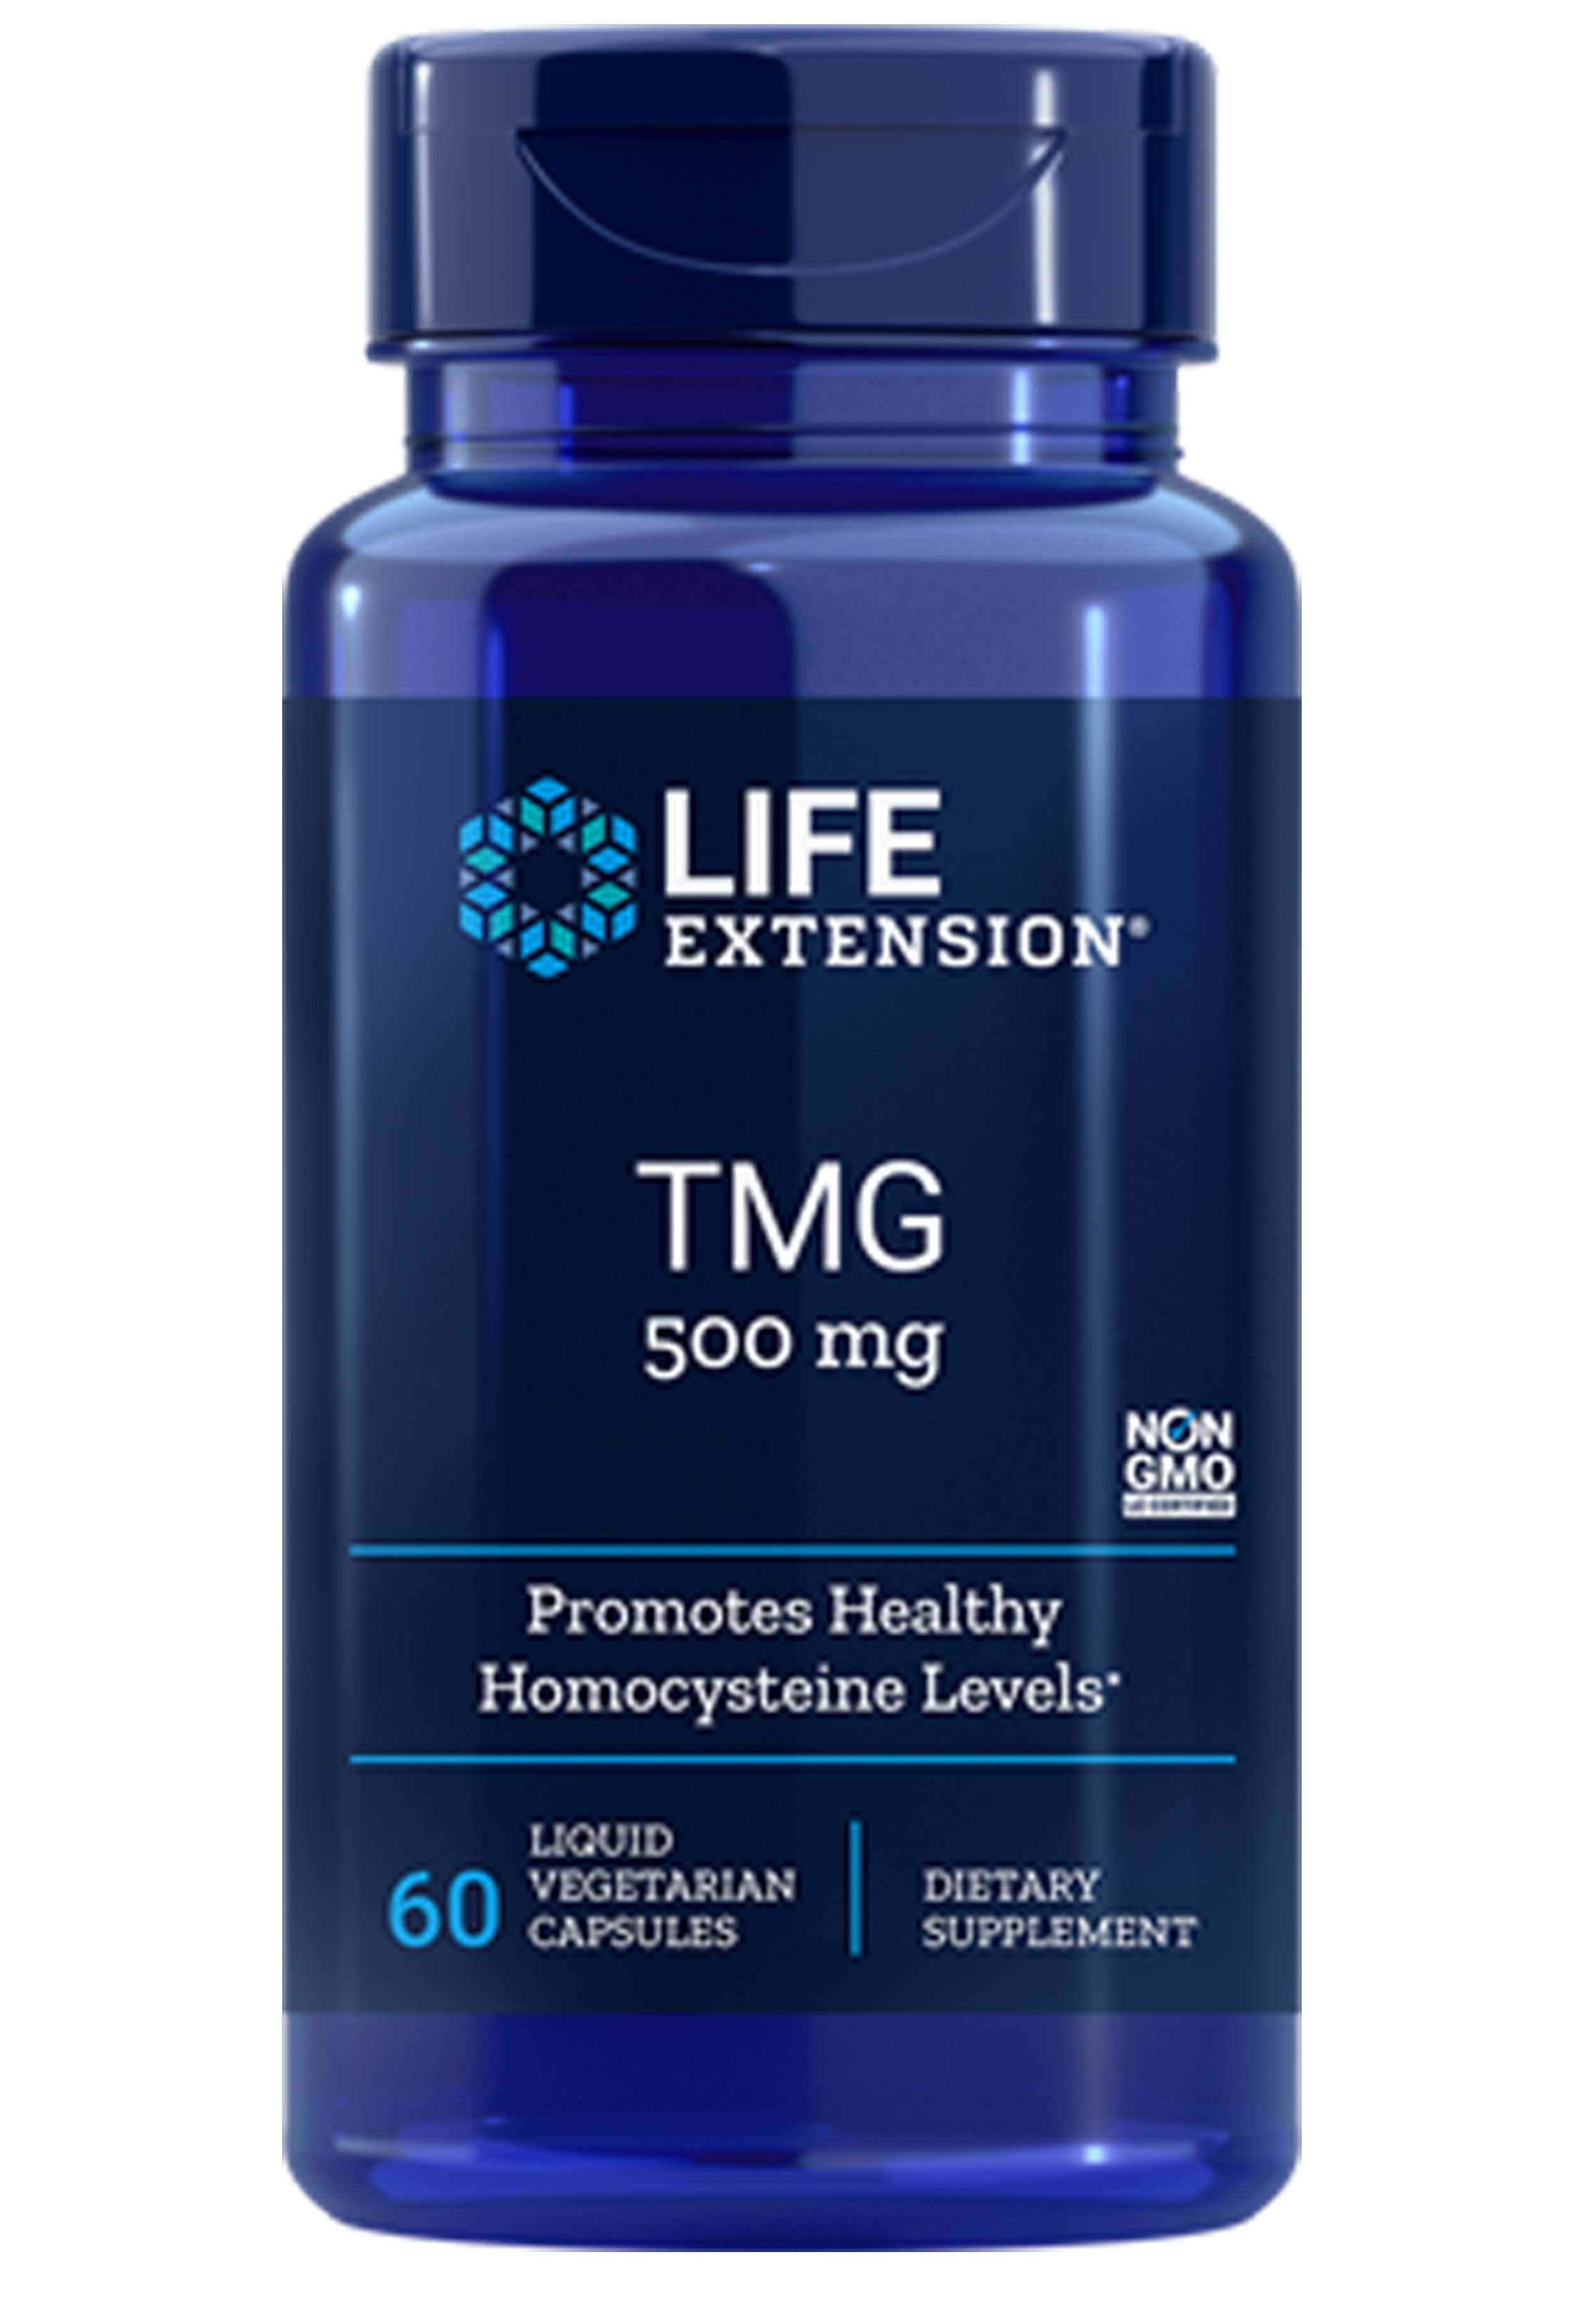 Life Extension TMG (Trimethylglycine)